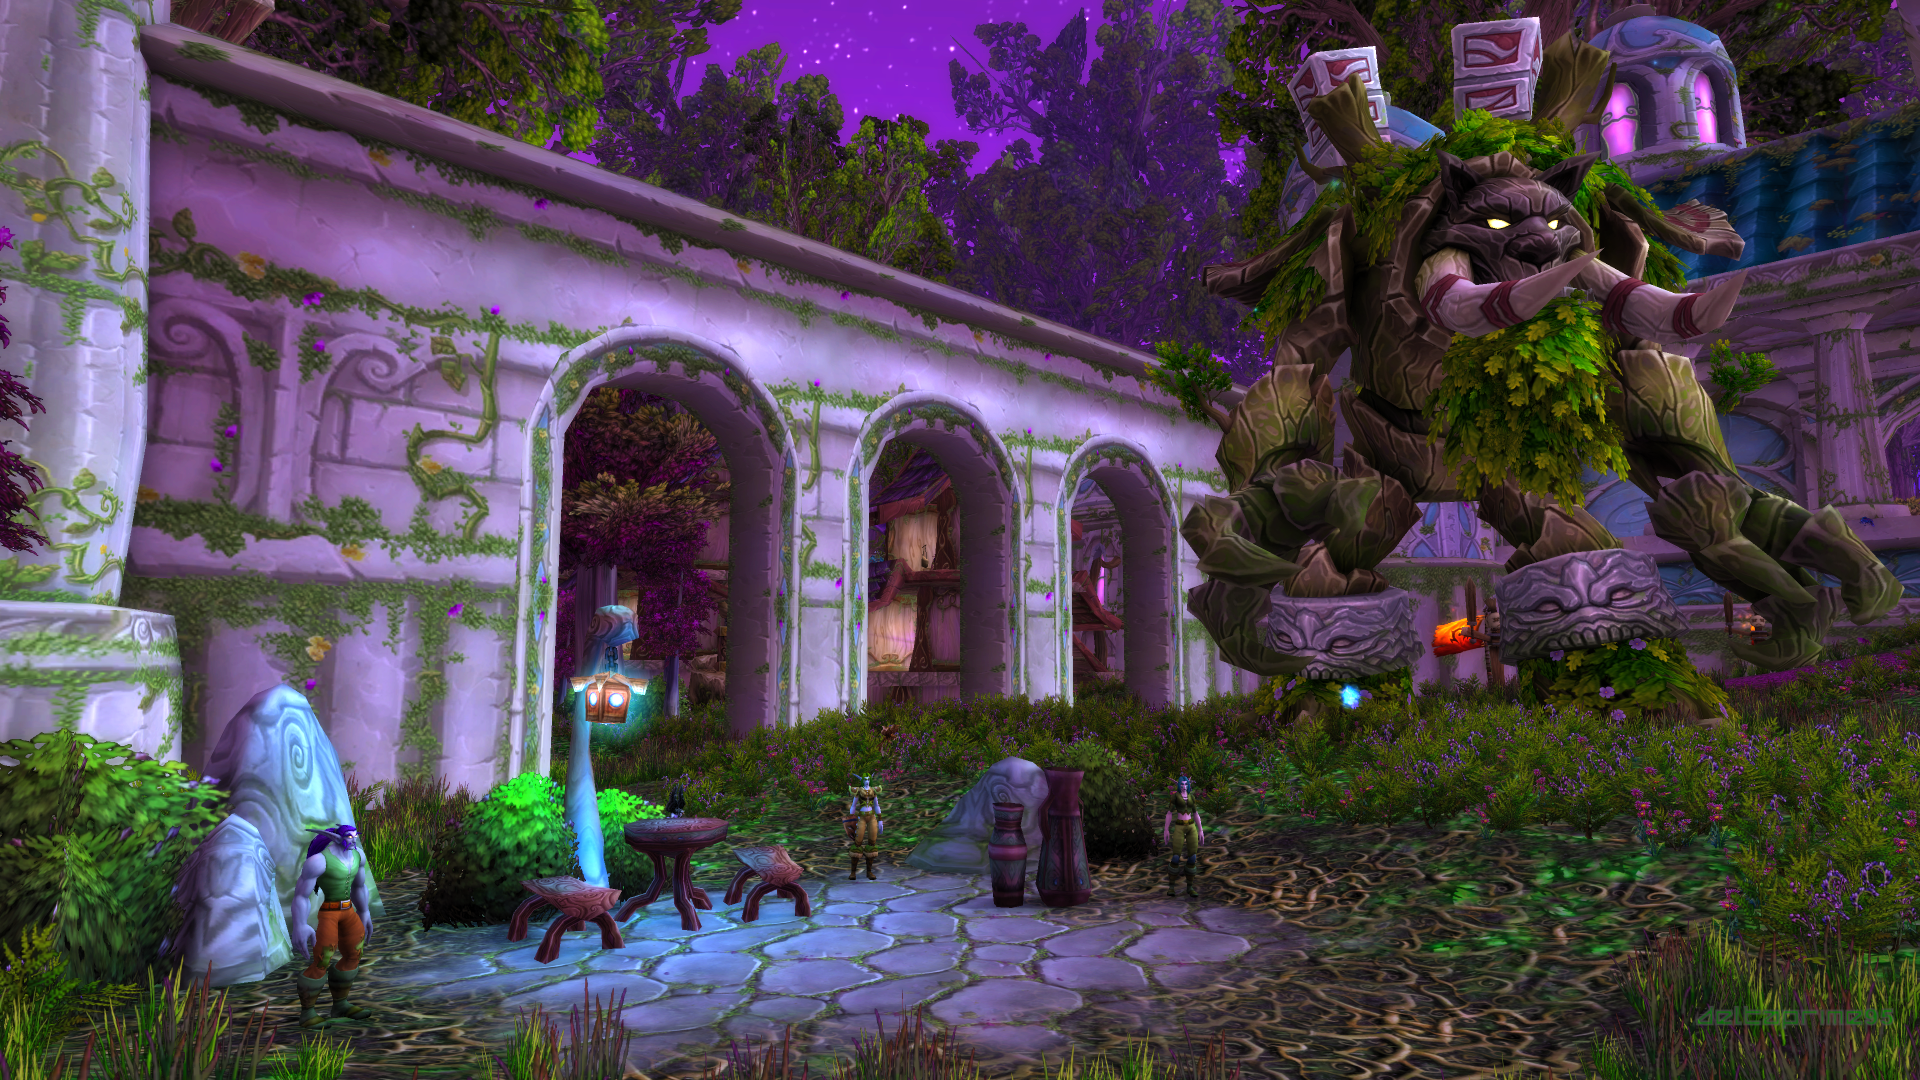 General 1920x1080 World of Warcraft Darnassus night elves forest PC gaming screen shot